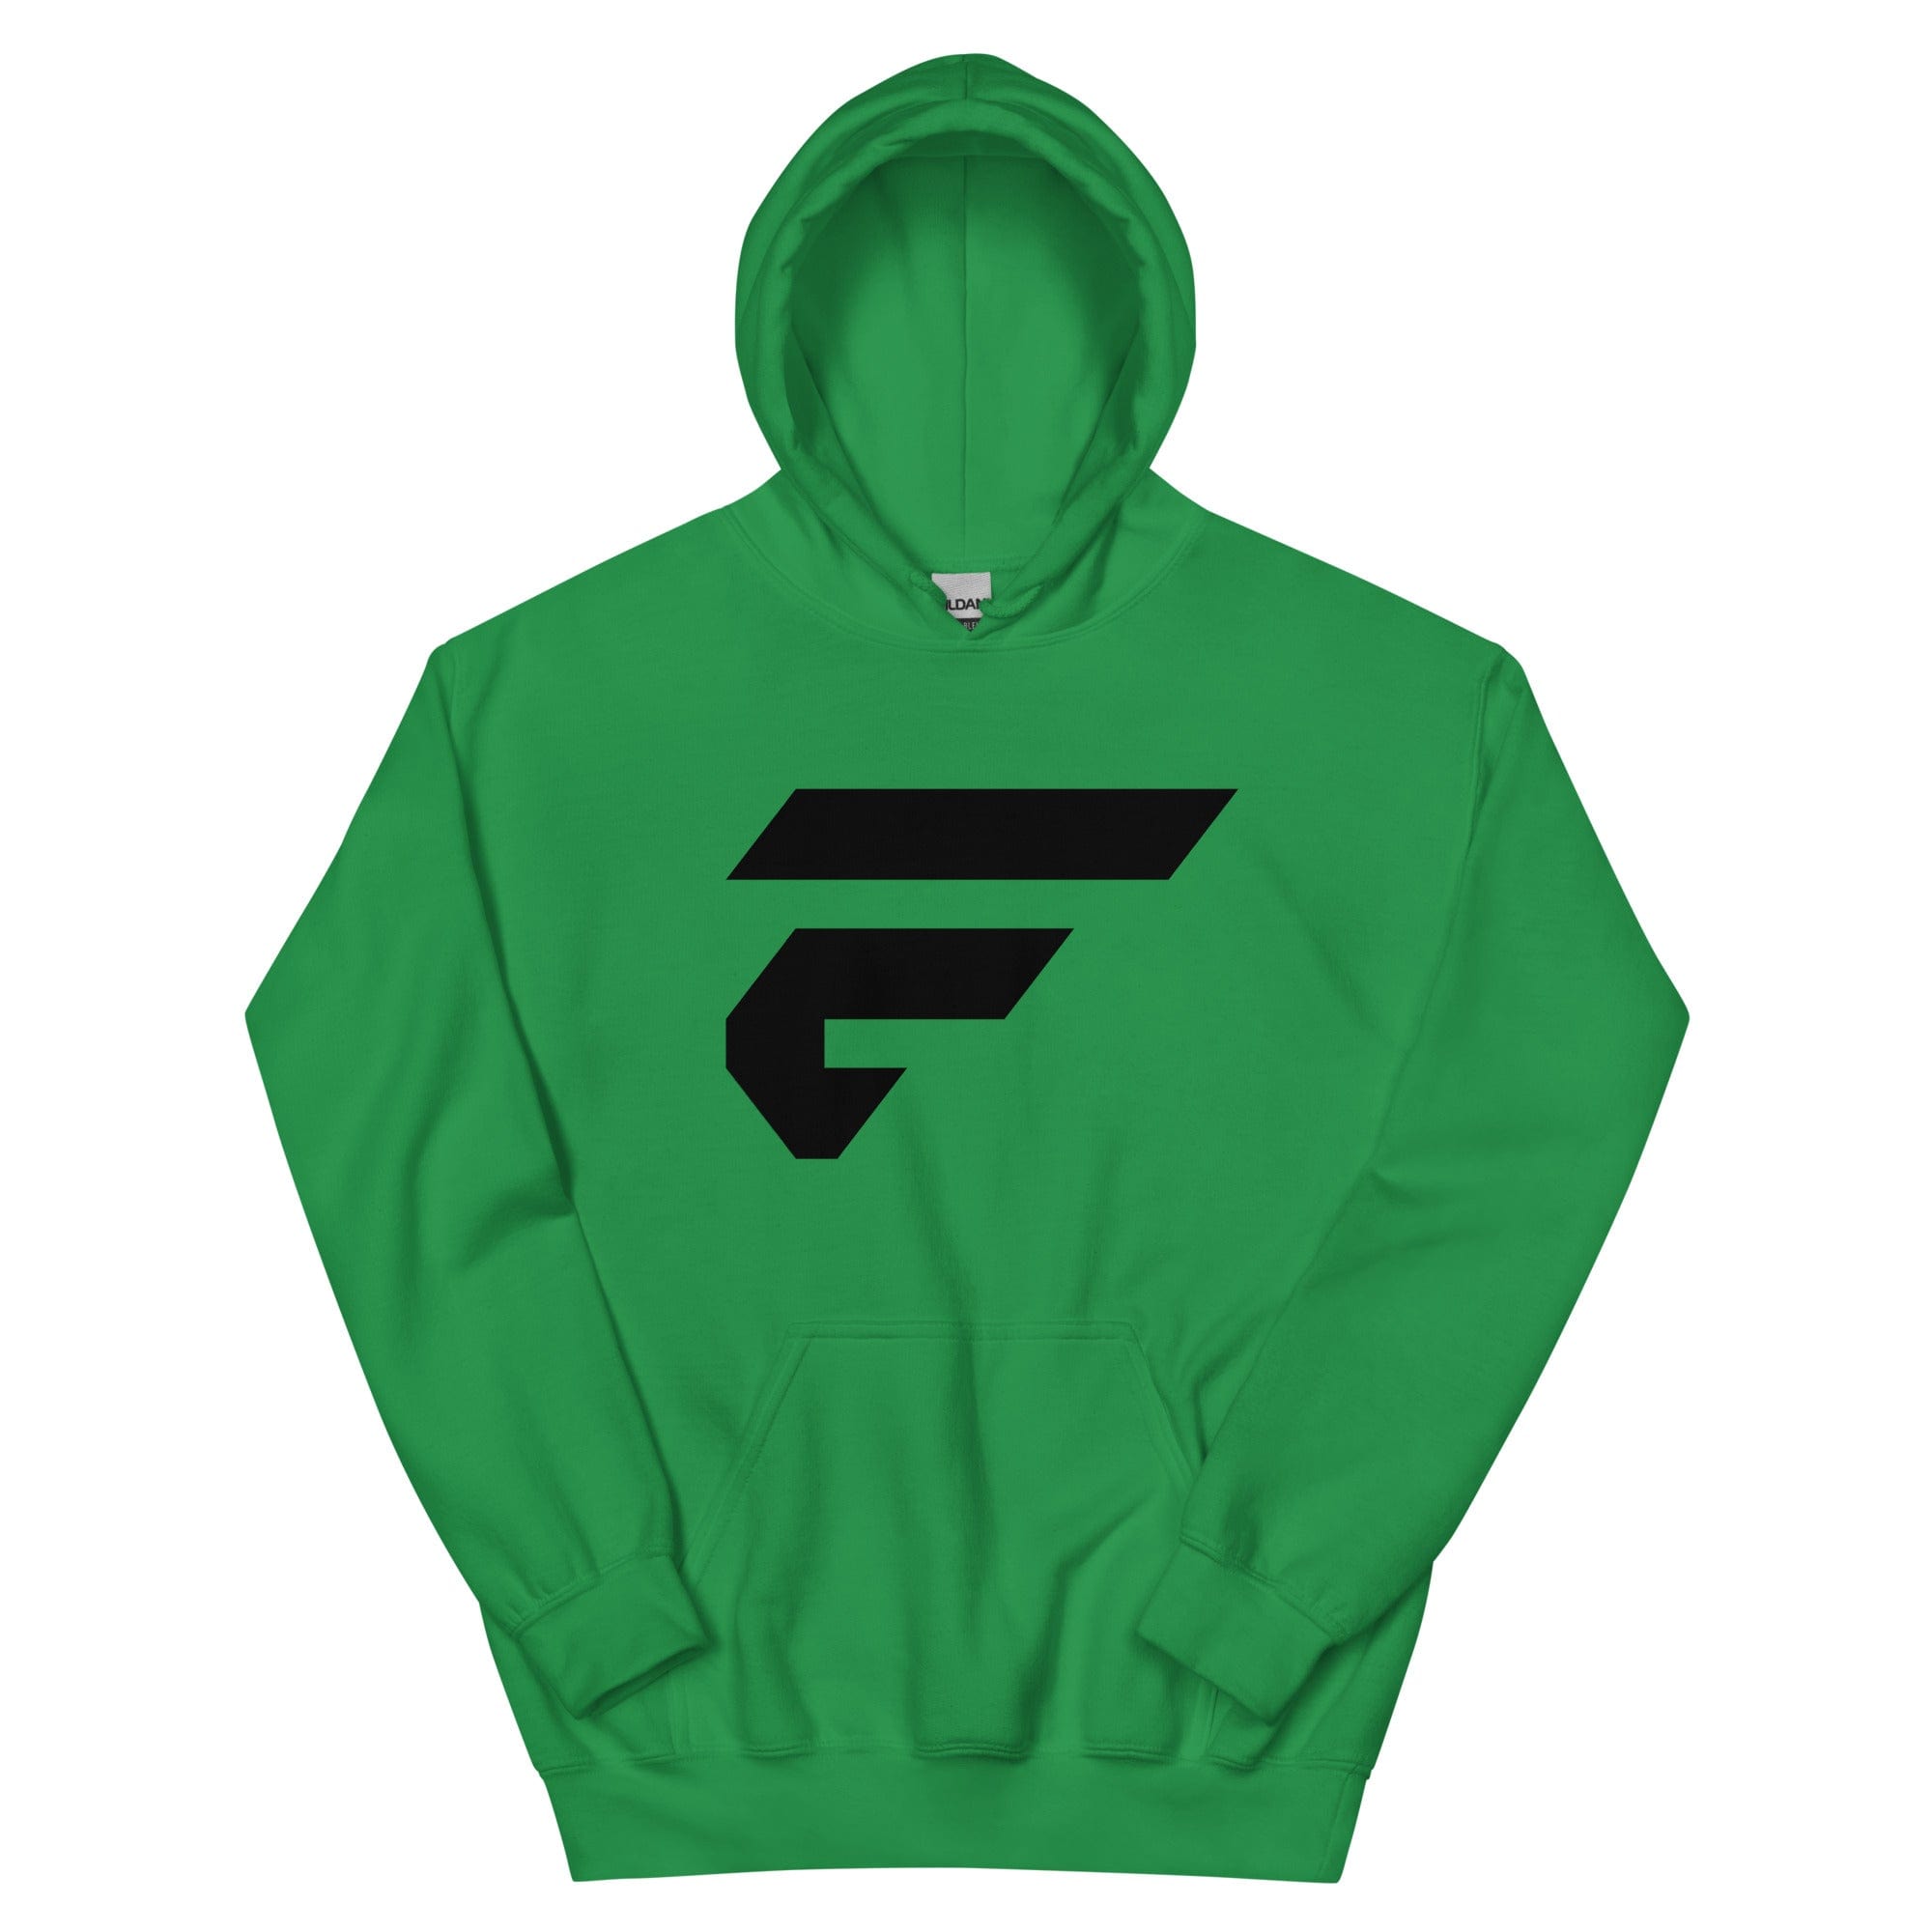 Green unisex cotton hoodie with Fire Cornhole F logo in black